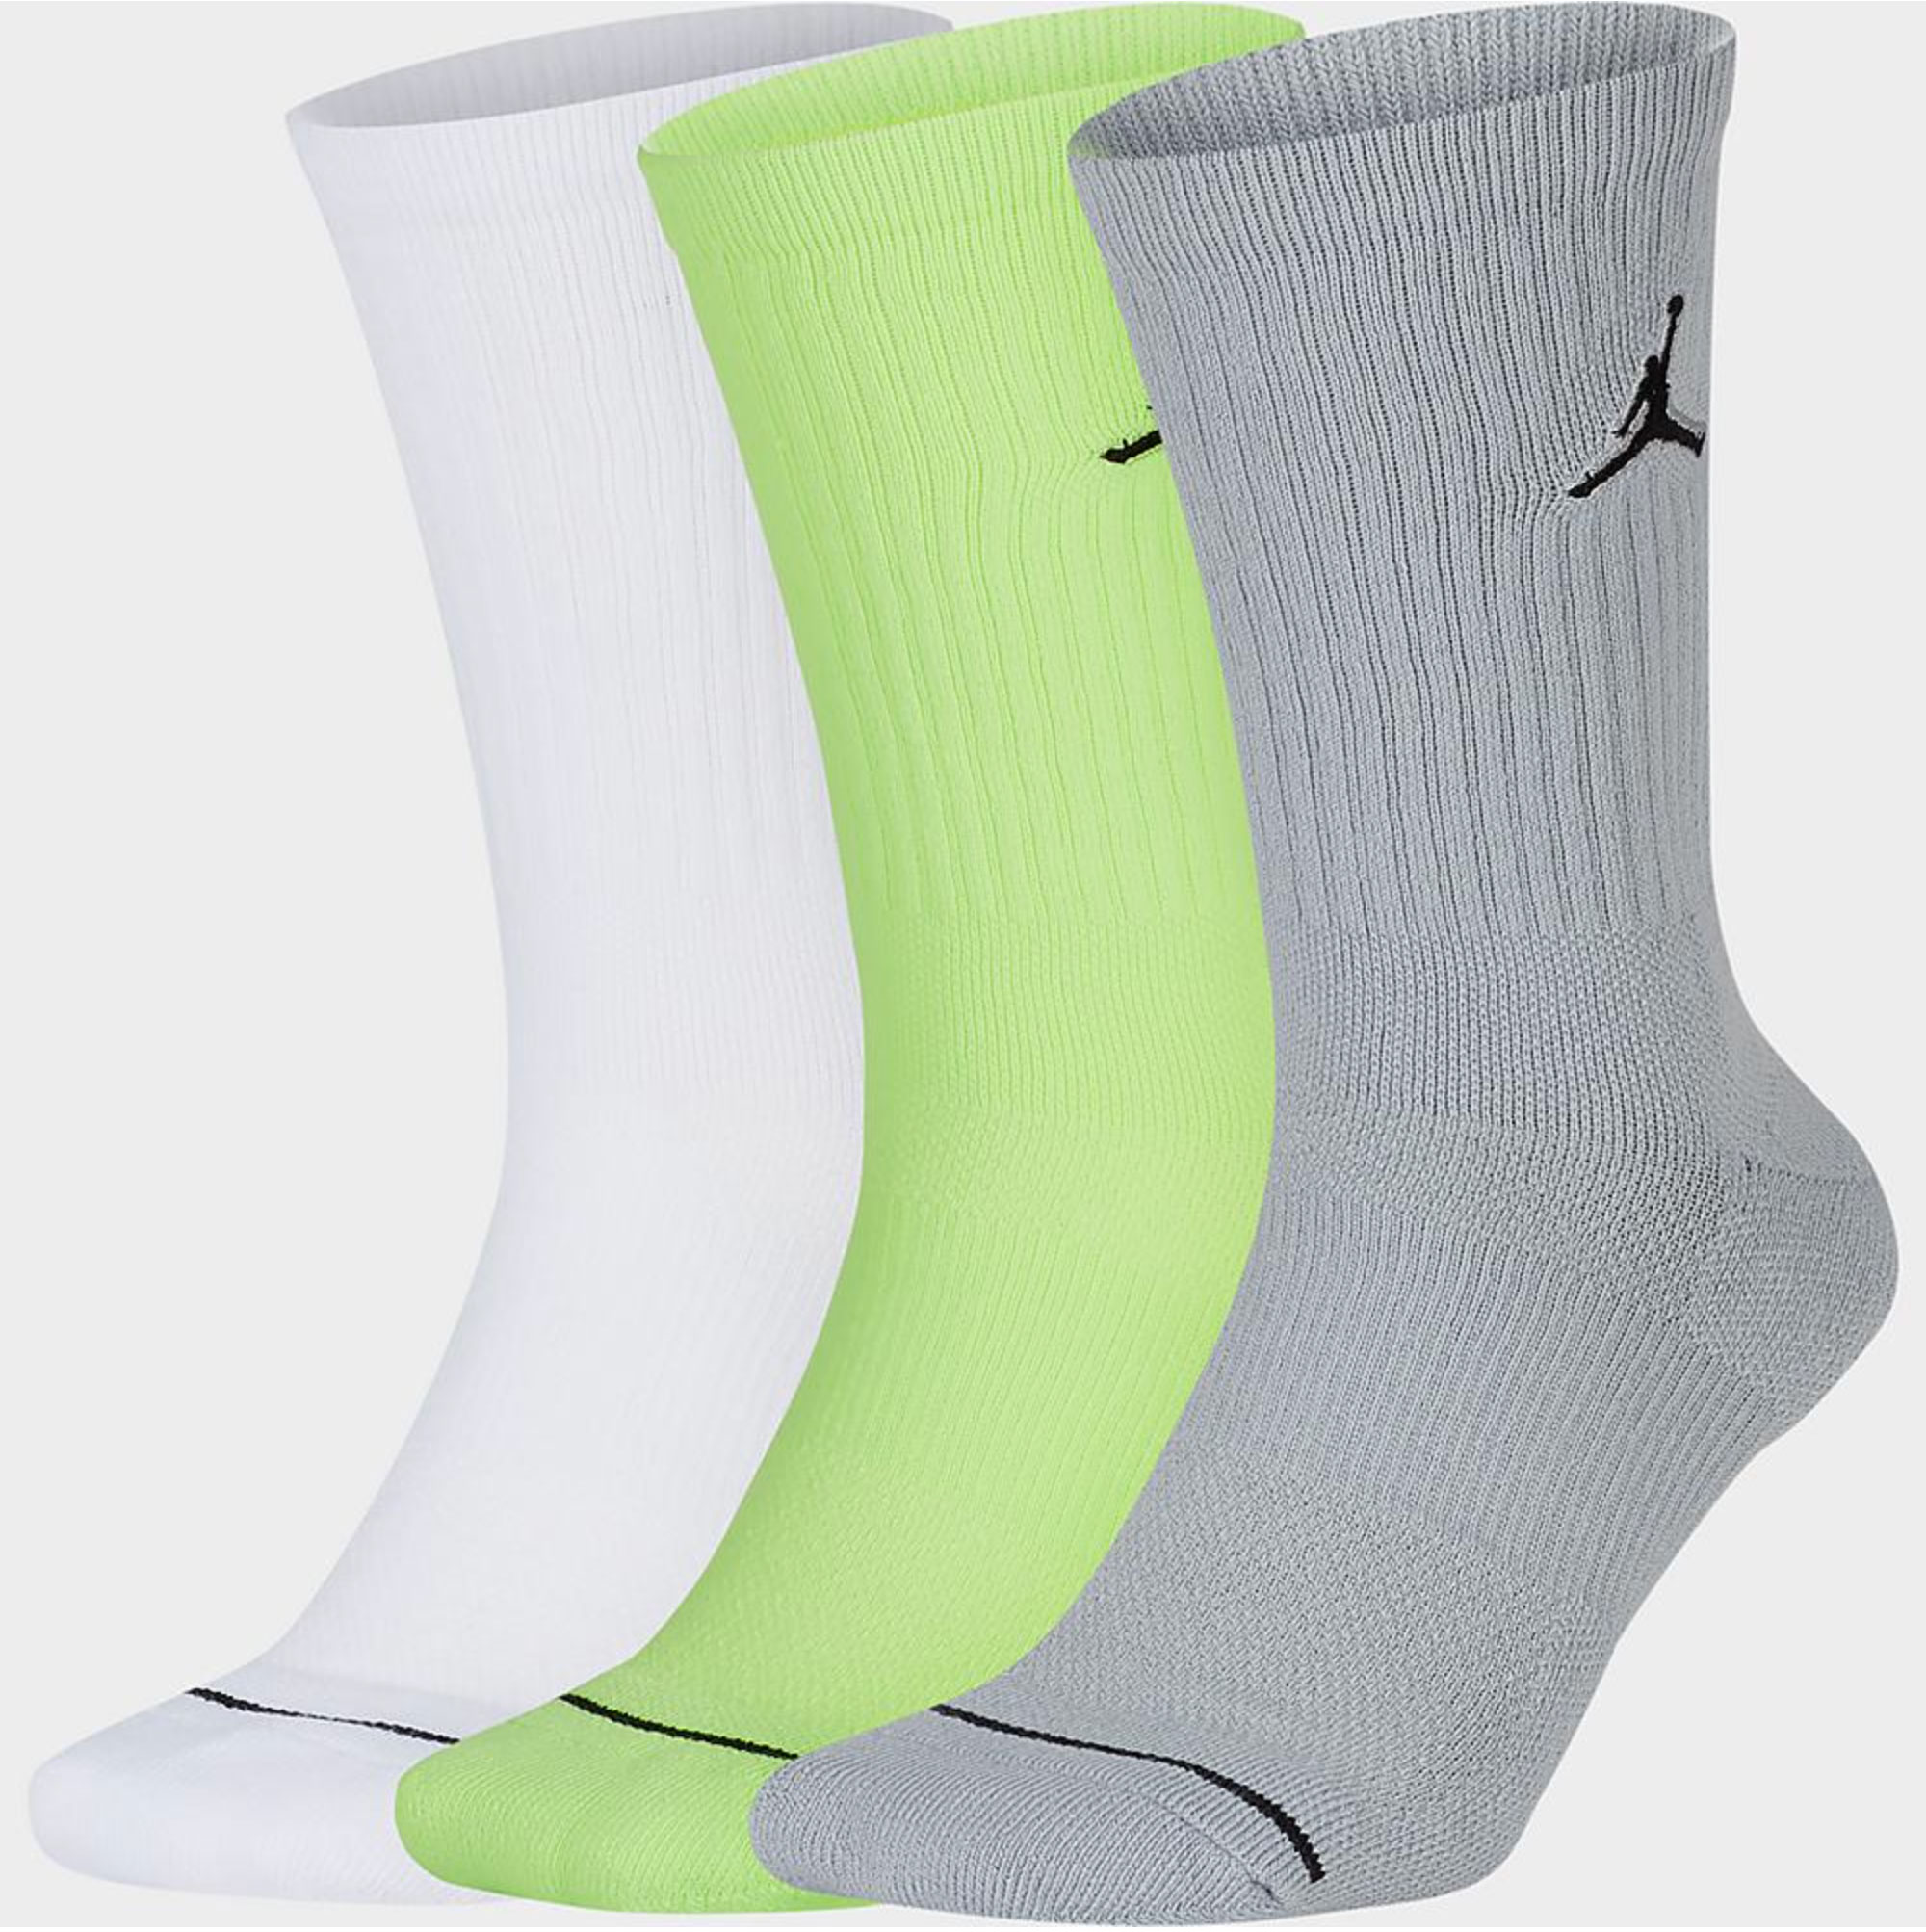 jordan-neon-volt-grey-socks-1